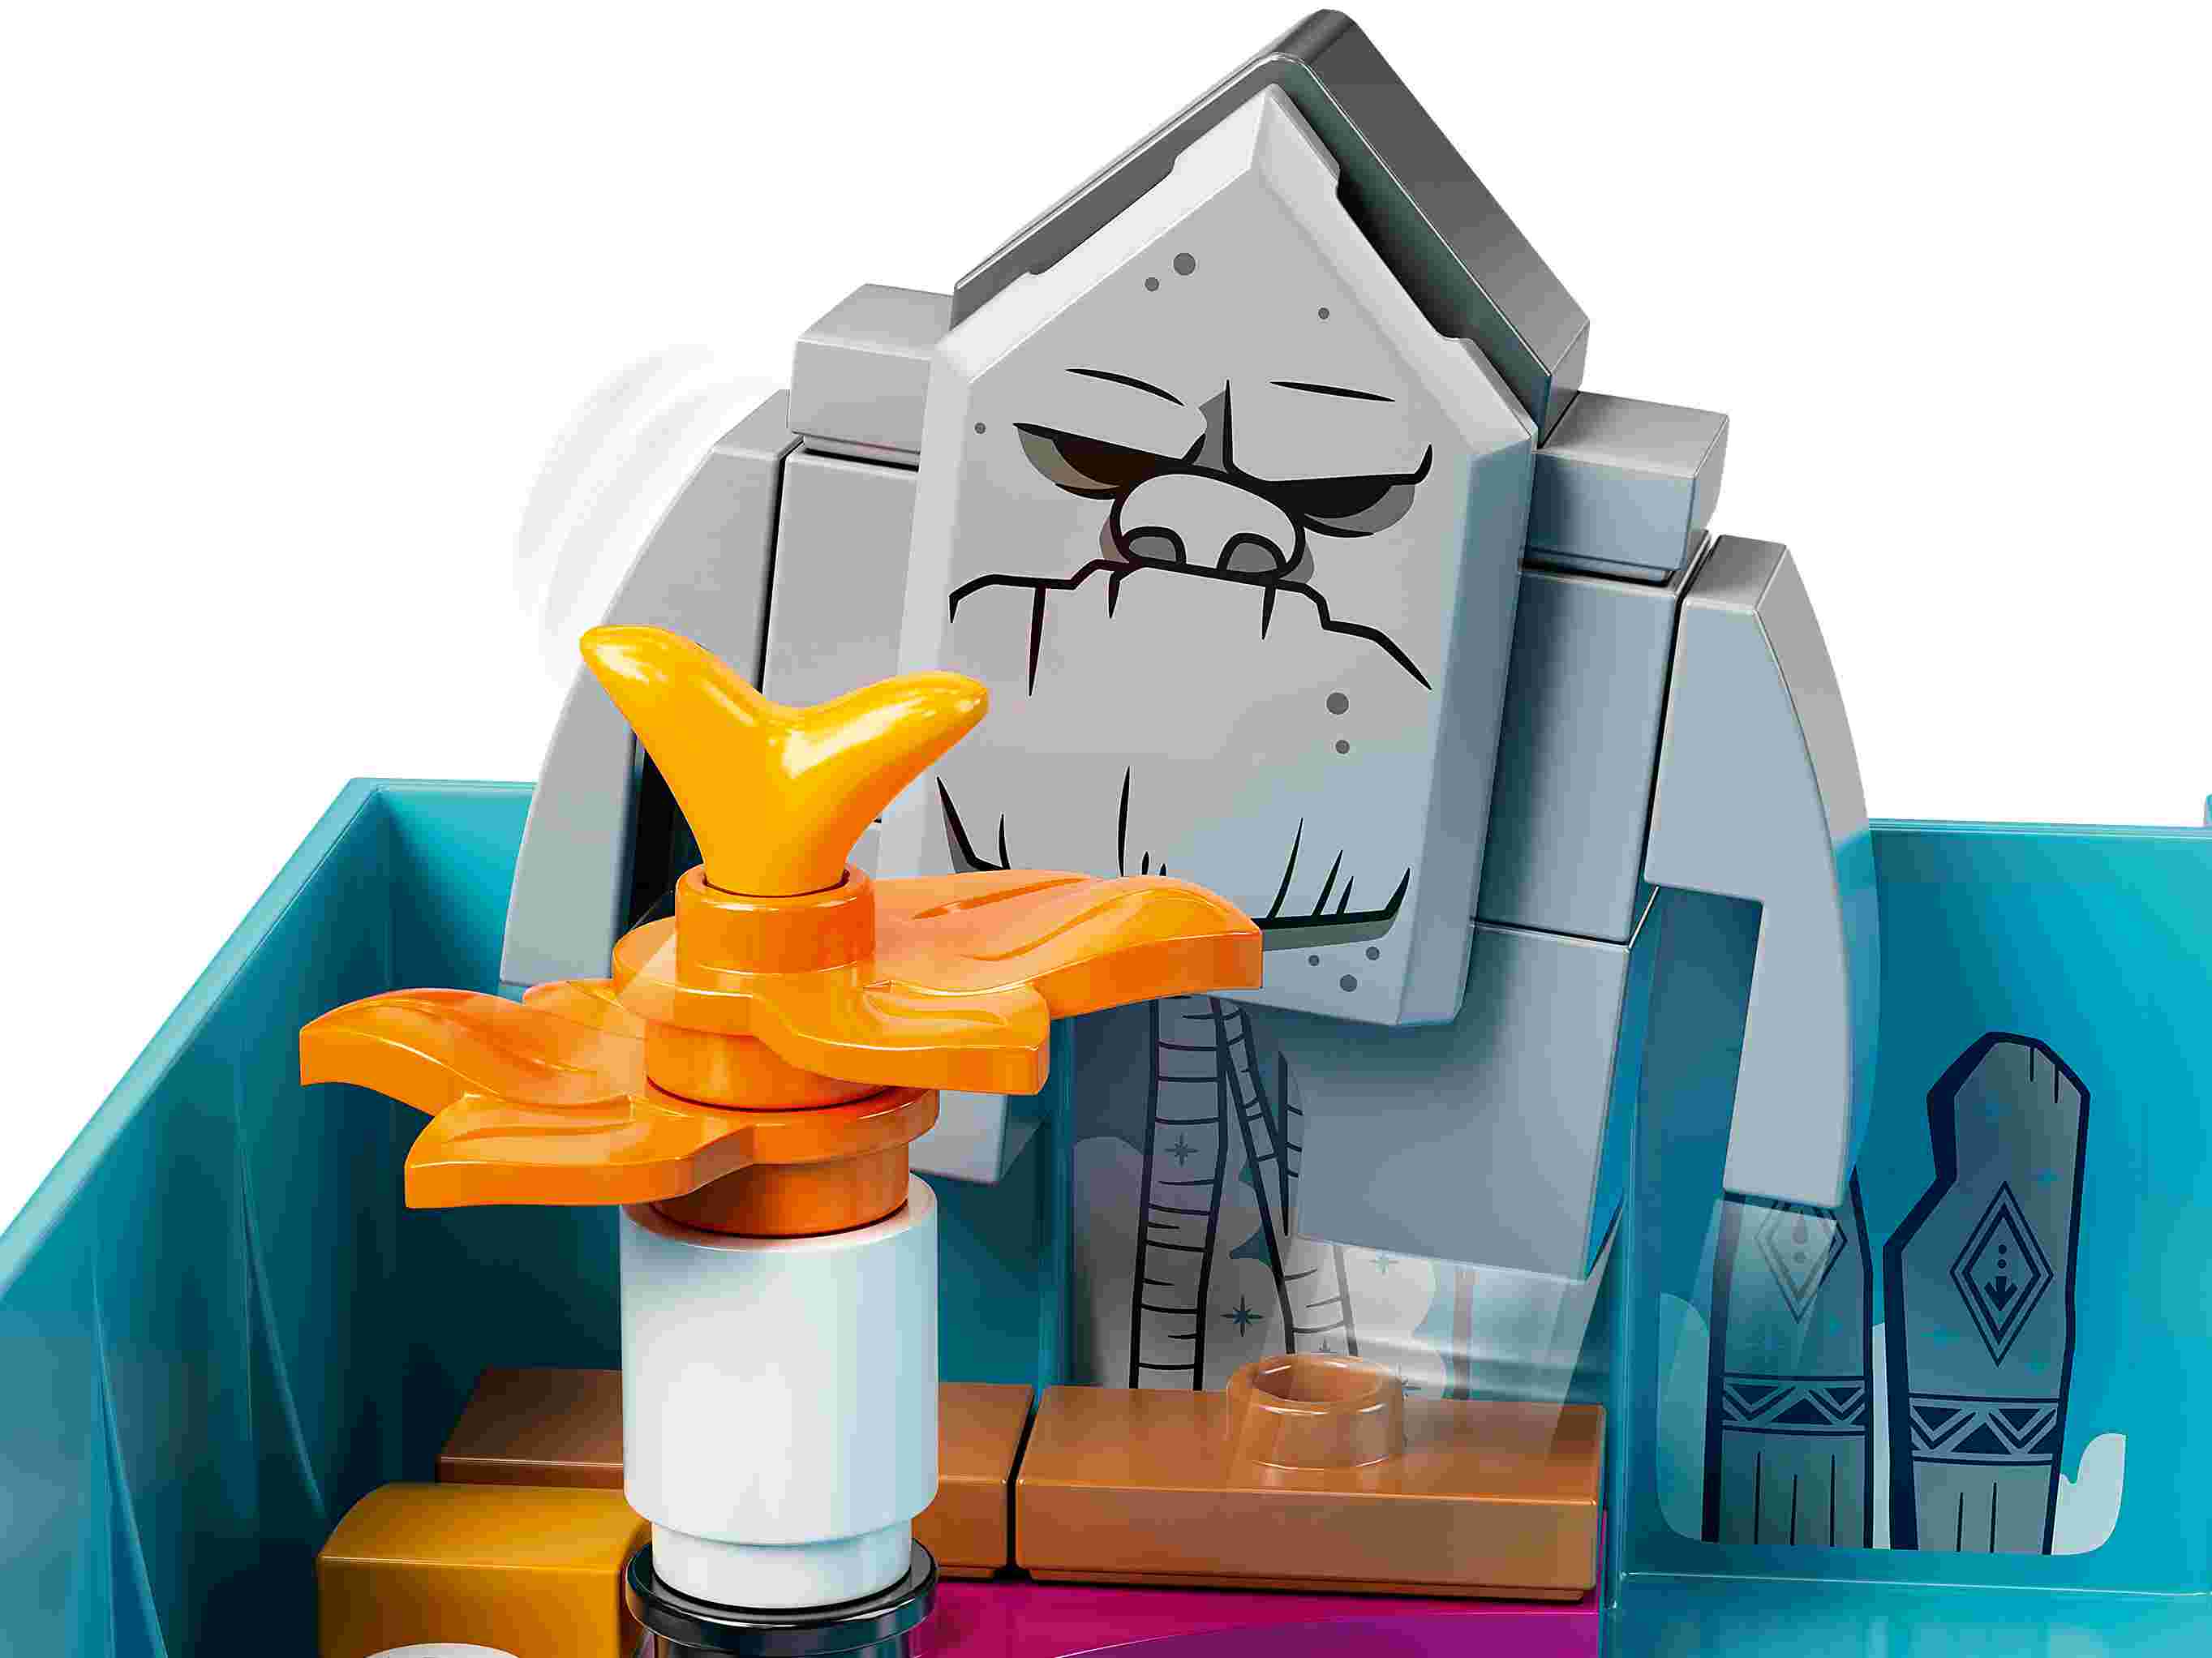 LEGO 43189 Disney Princess Elsas Märchenbuch, Frozen 2, 3 Mikro-Spielfiguren